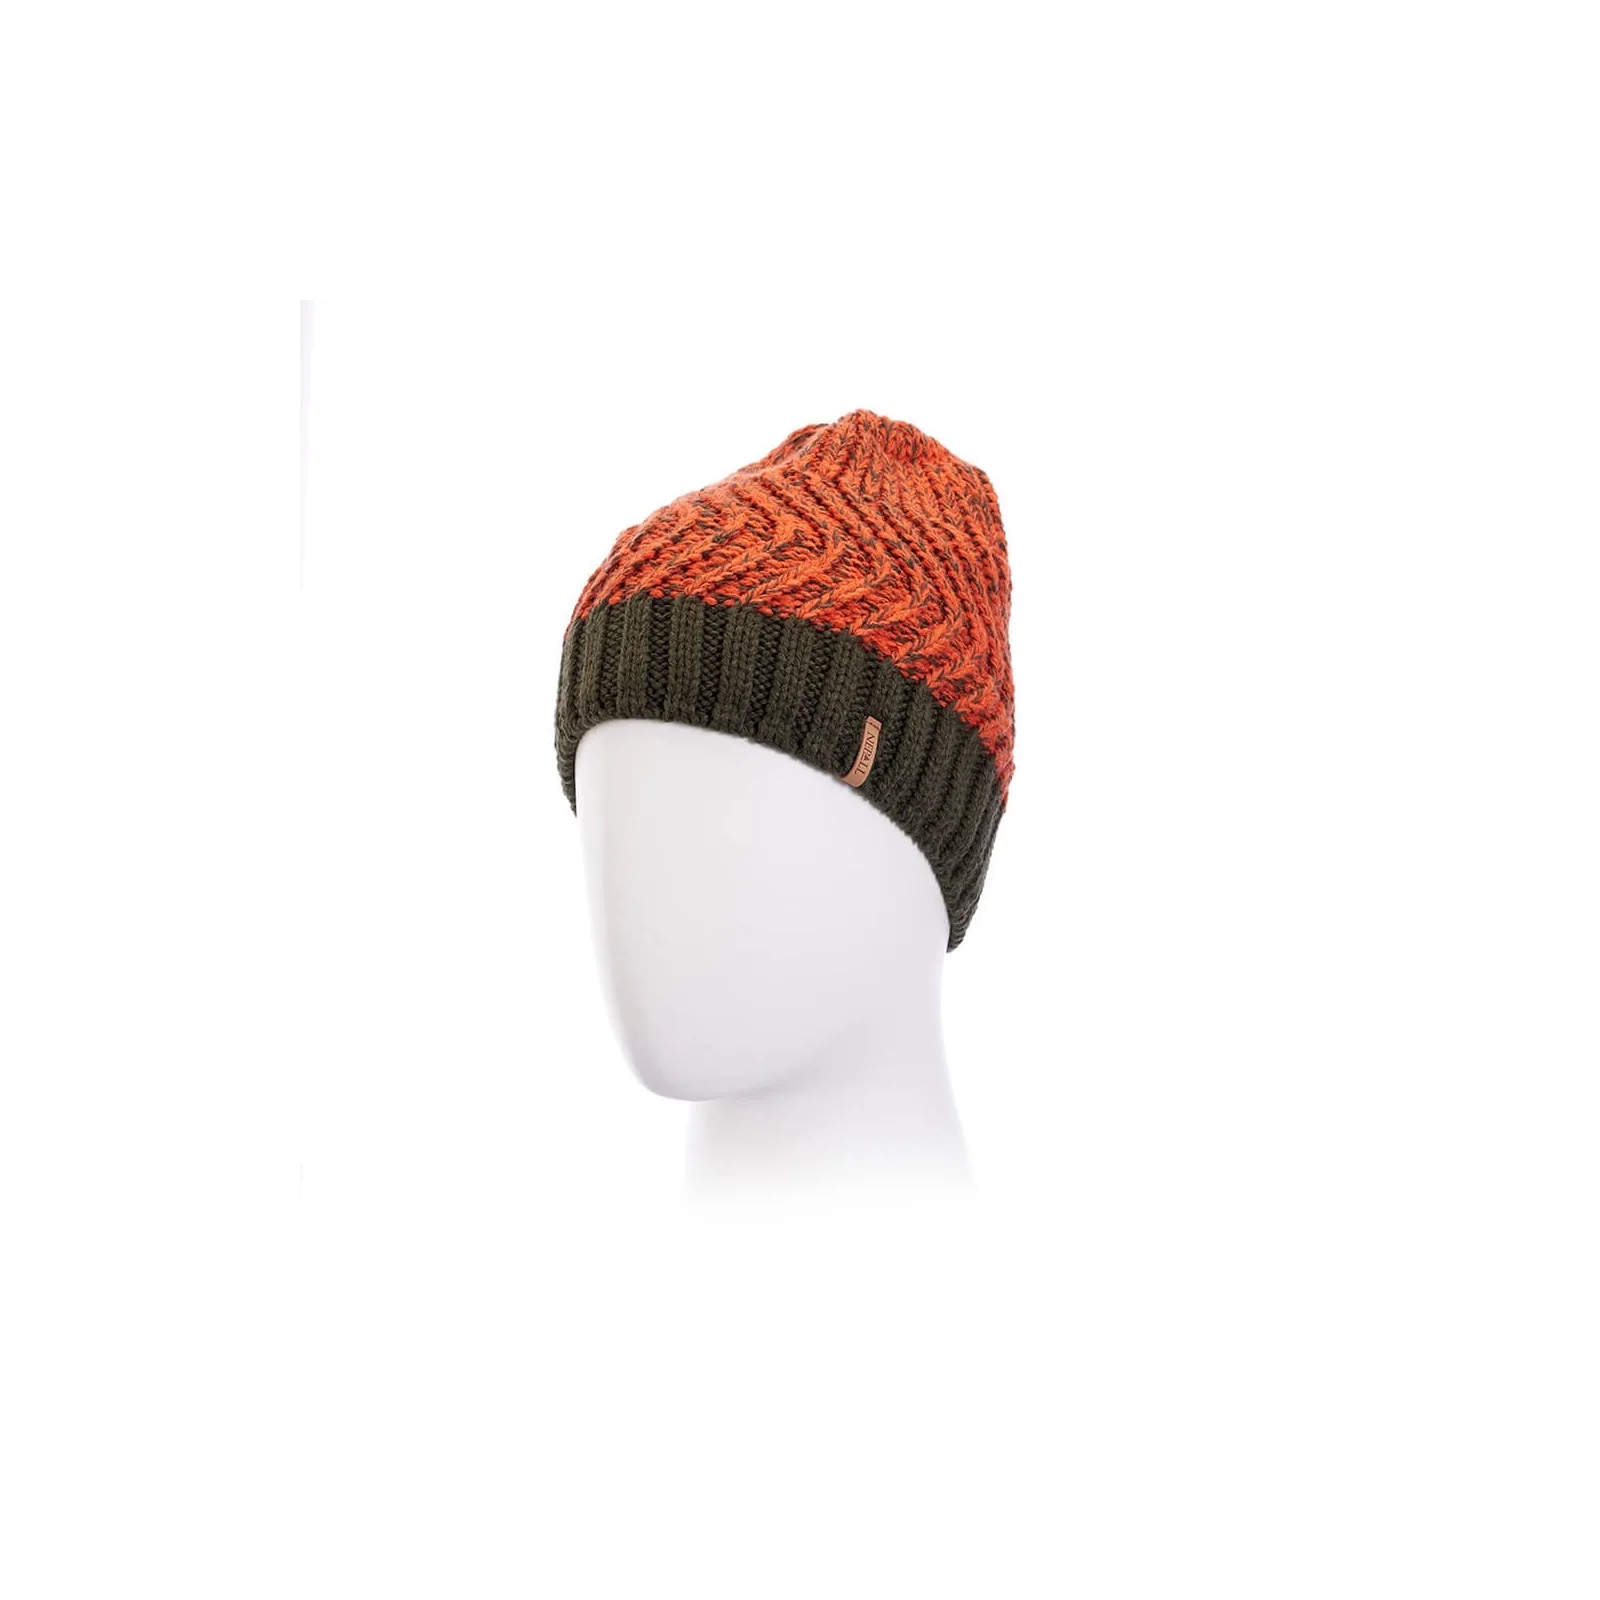 Фото Nepall Torrey Мужская зимняя теплая шапка новая мода для взрослых унисекс вязаные